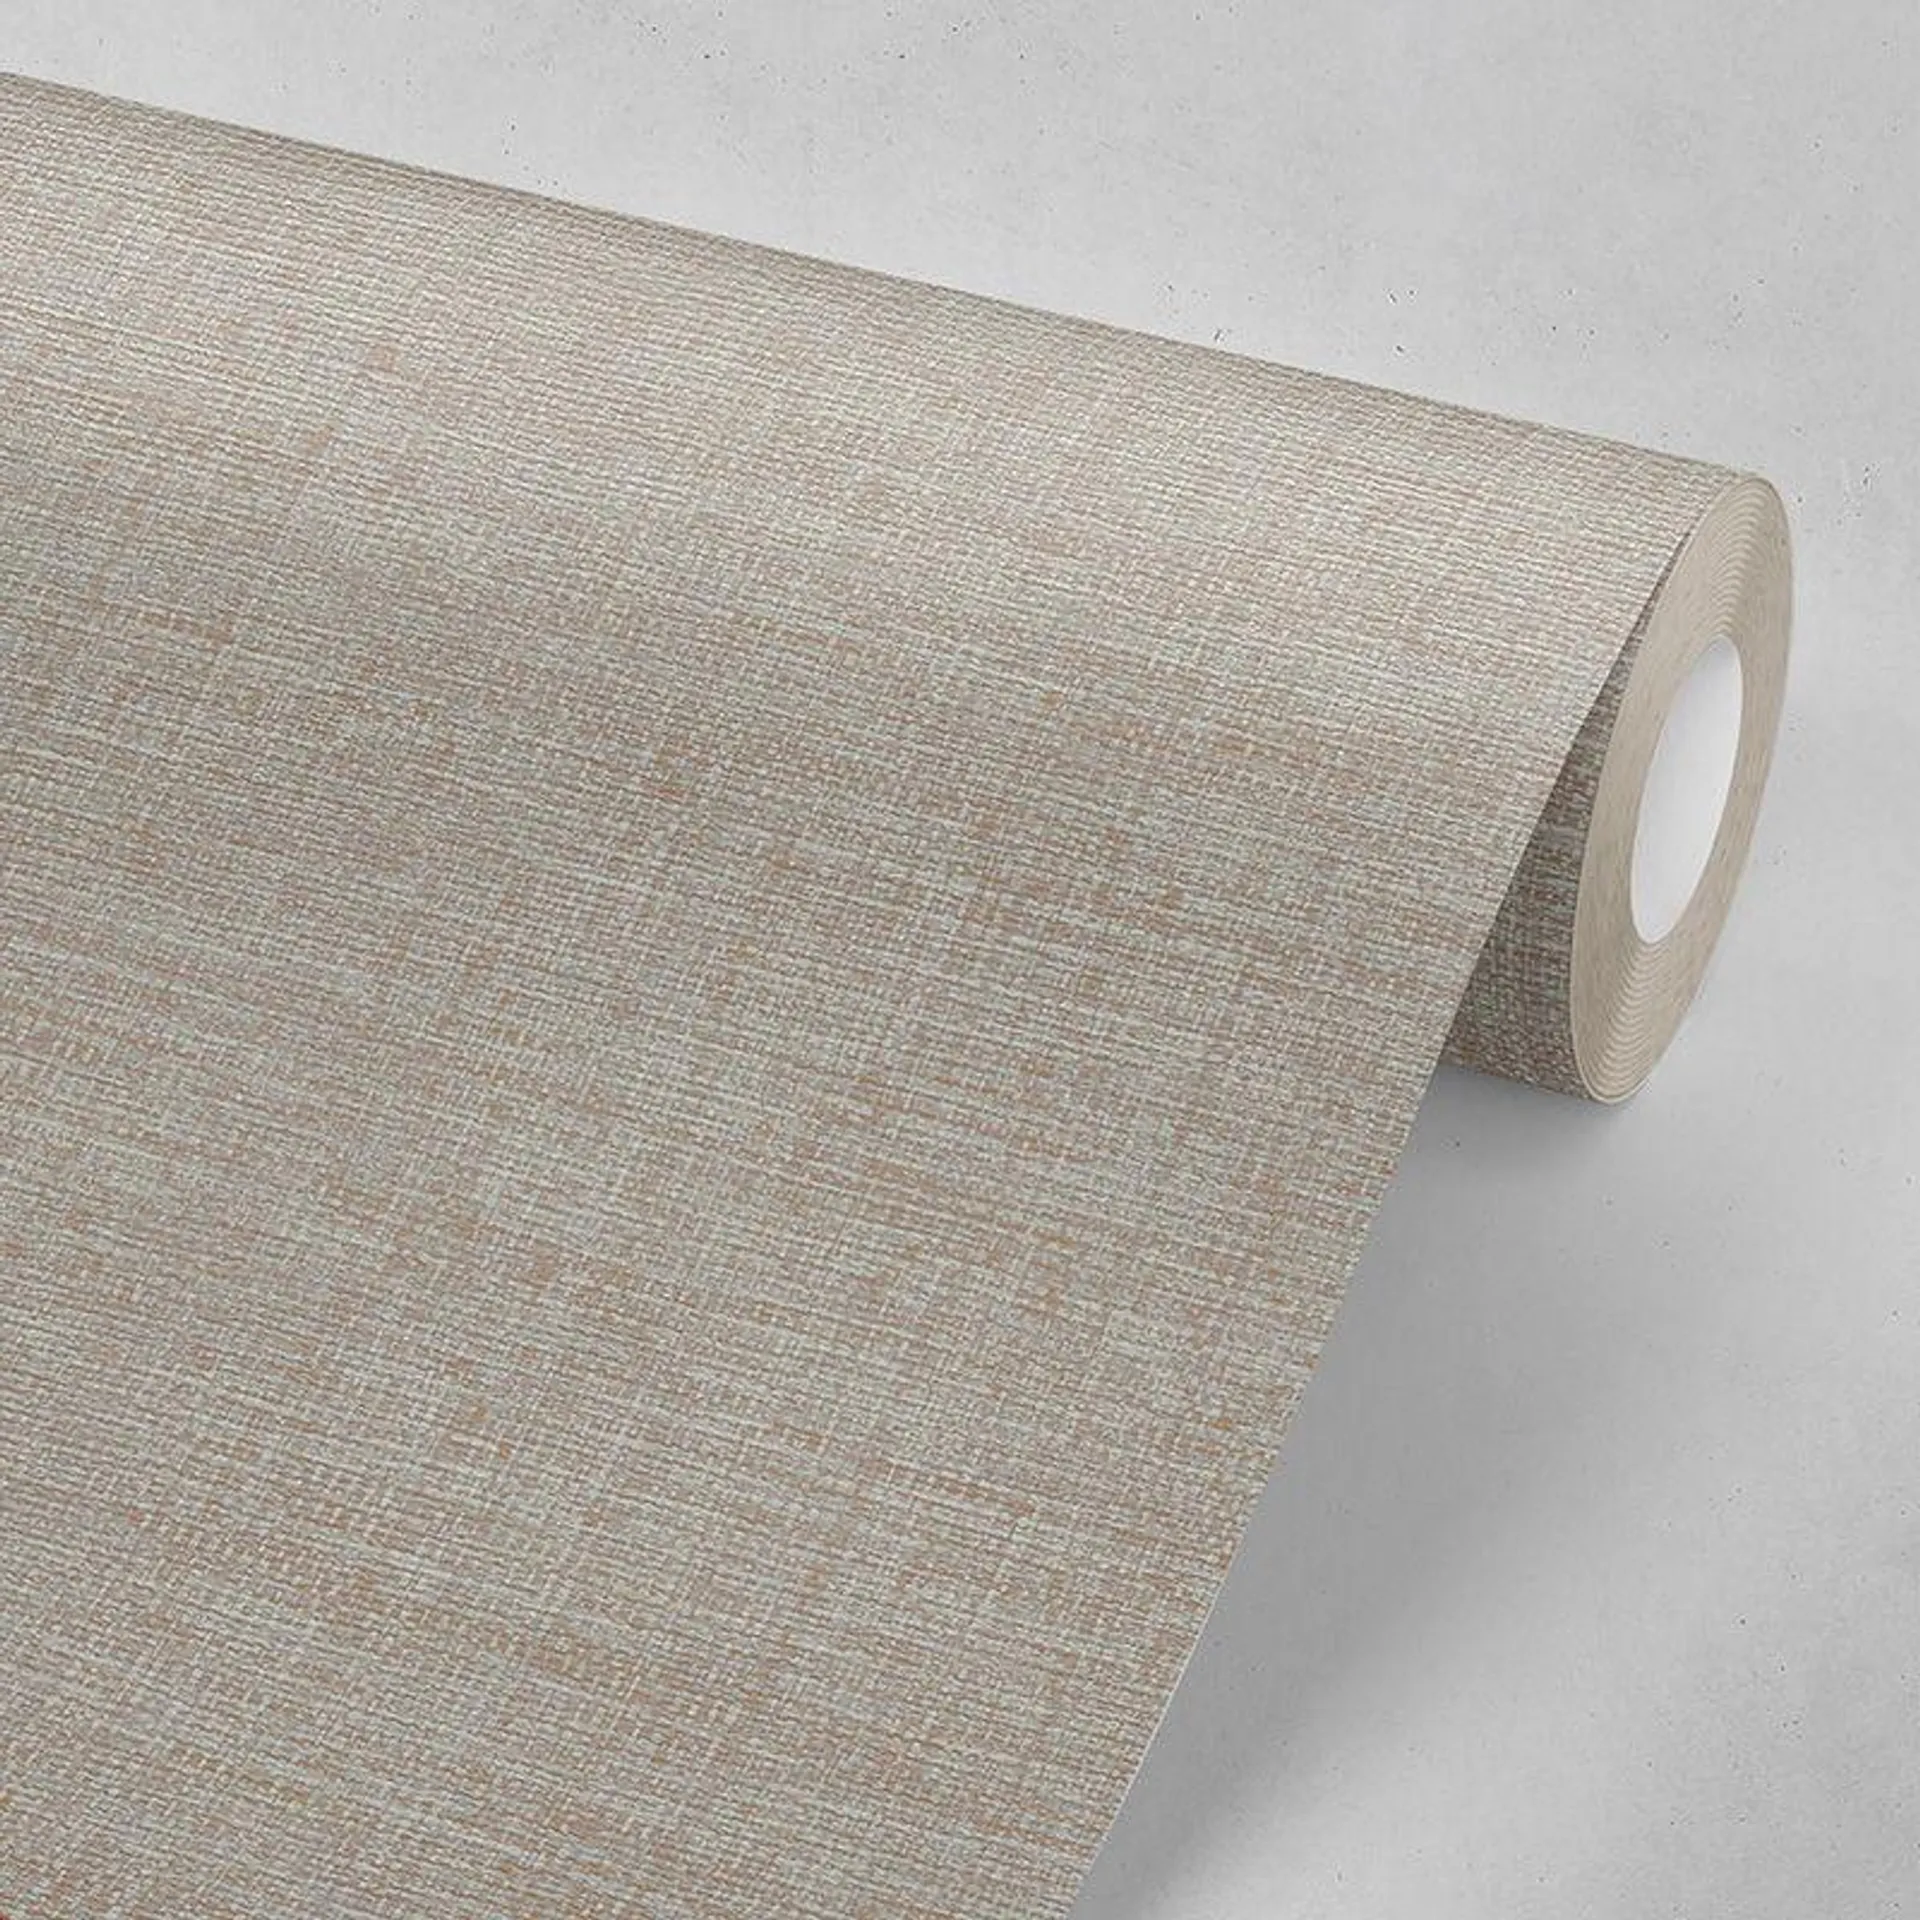 Wallpaper Easy to Apply DIY Wallpaper Roll in Beige-ing